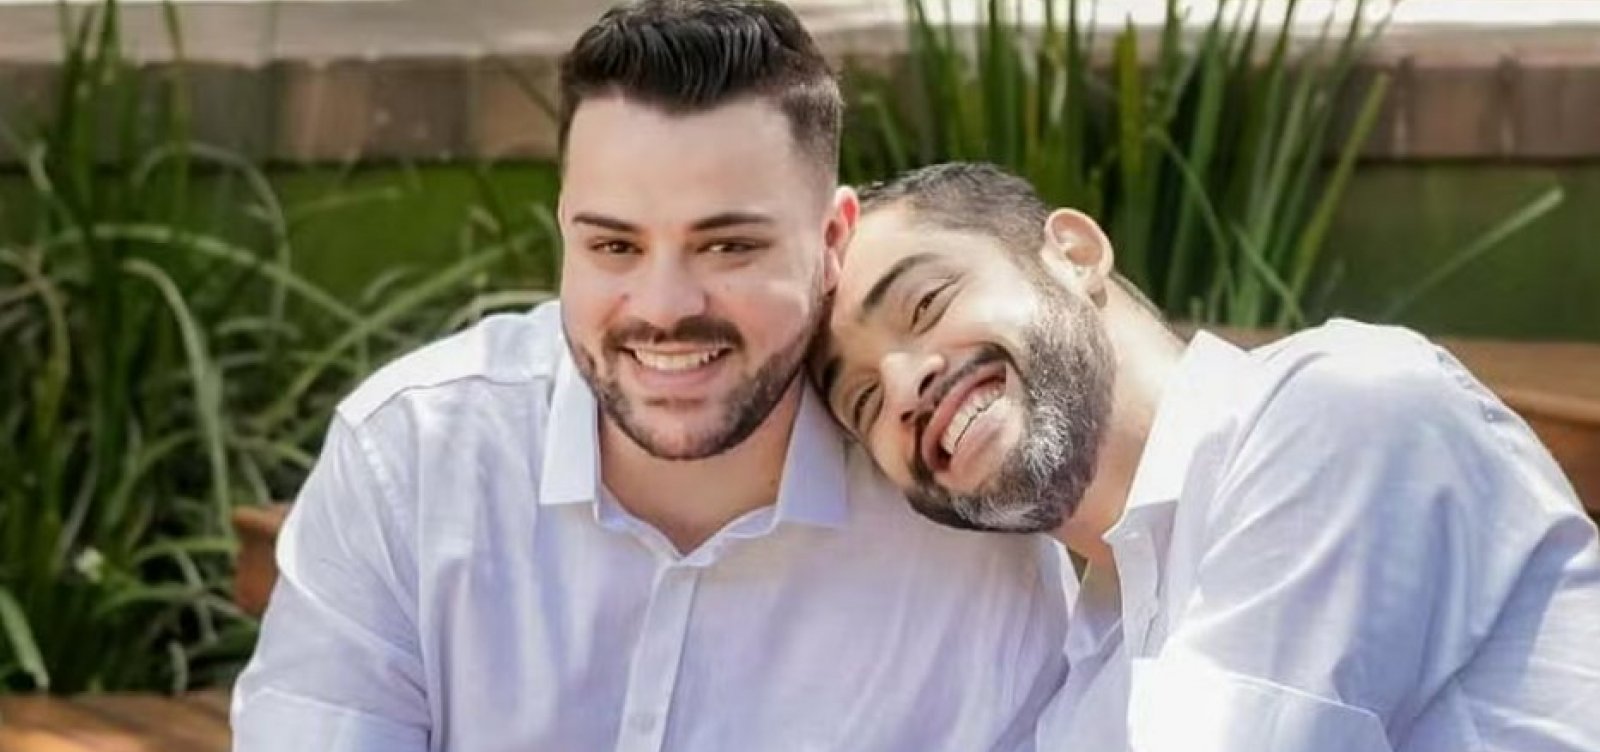 Casal gay relata caso de homofobia após empresa se recusar a fazer convite de casamento: "Questão de princípios" 